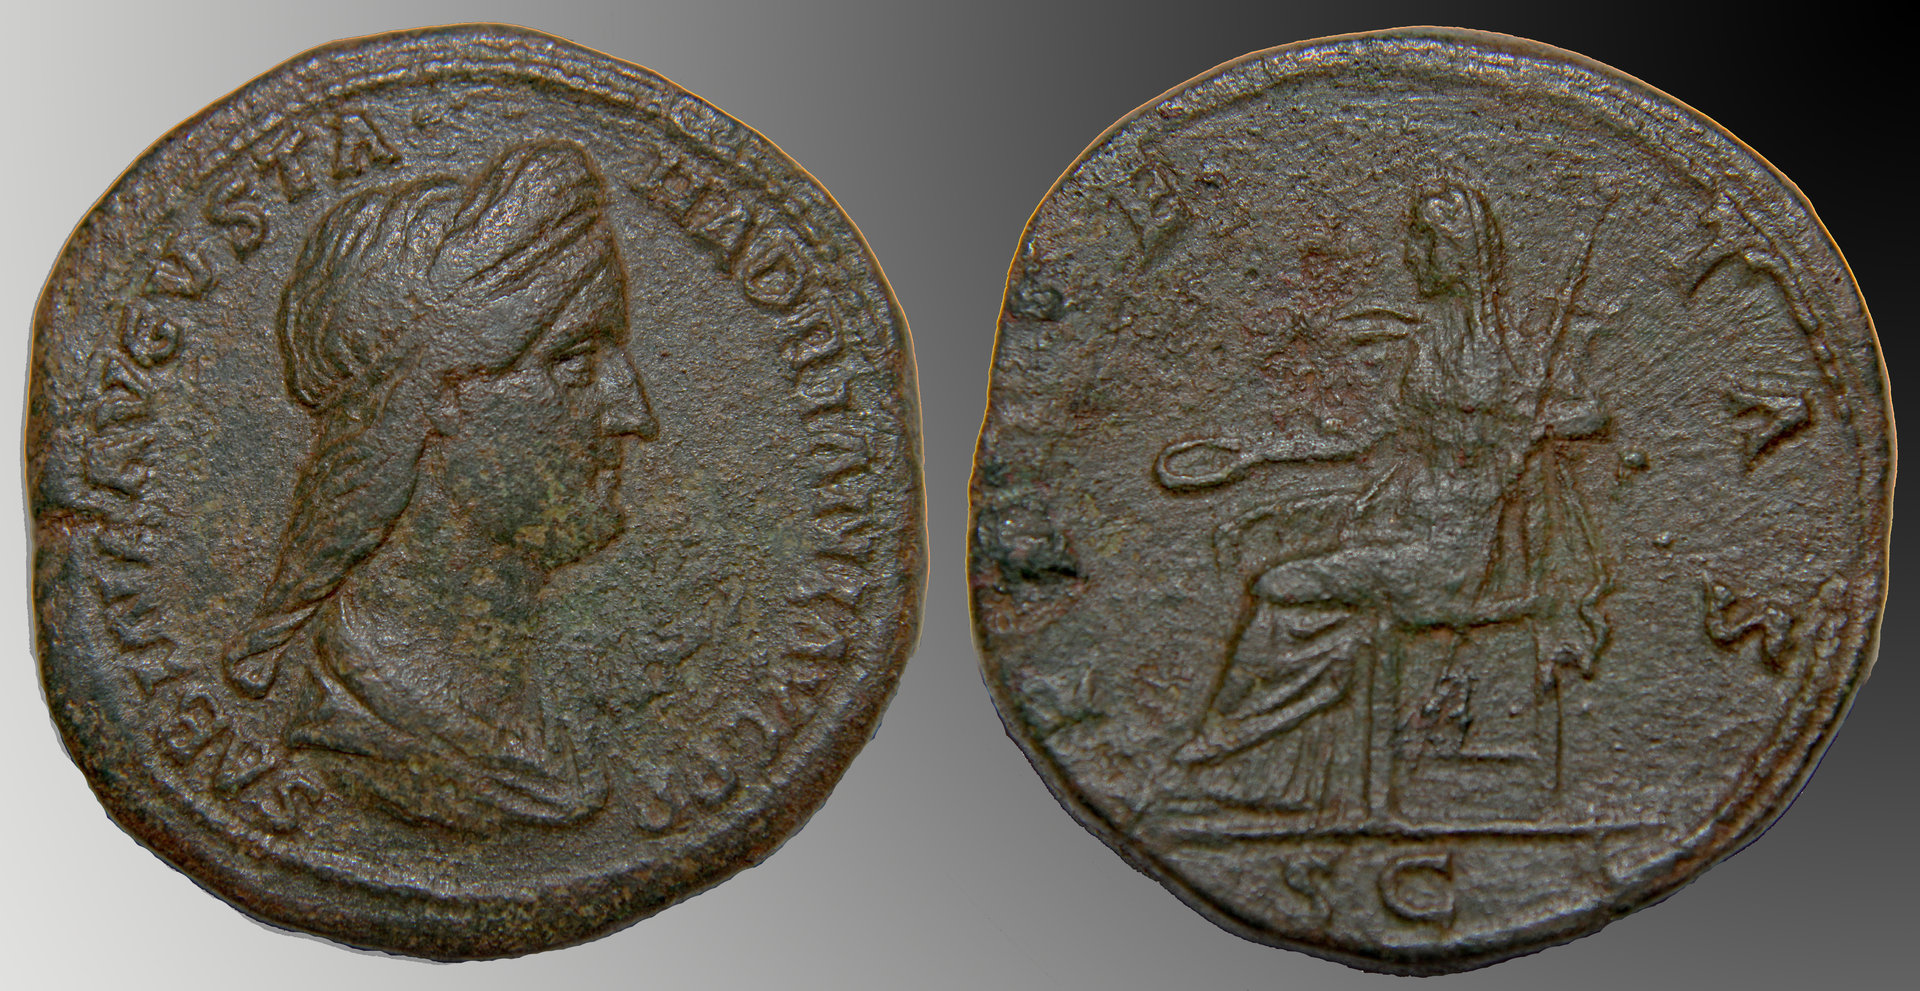 D-Camera Sabina sestertius Pietas,  128-136 AD, RIC 1029 27.0 g  eBay 2020 12-2-20.jpg